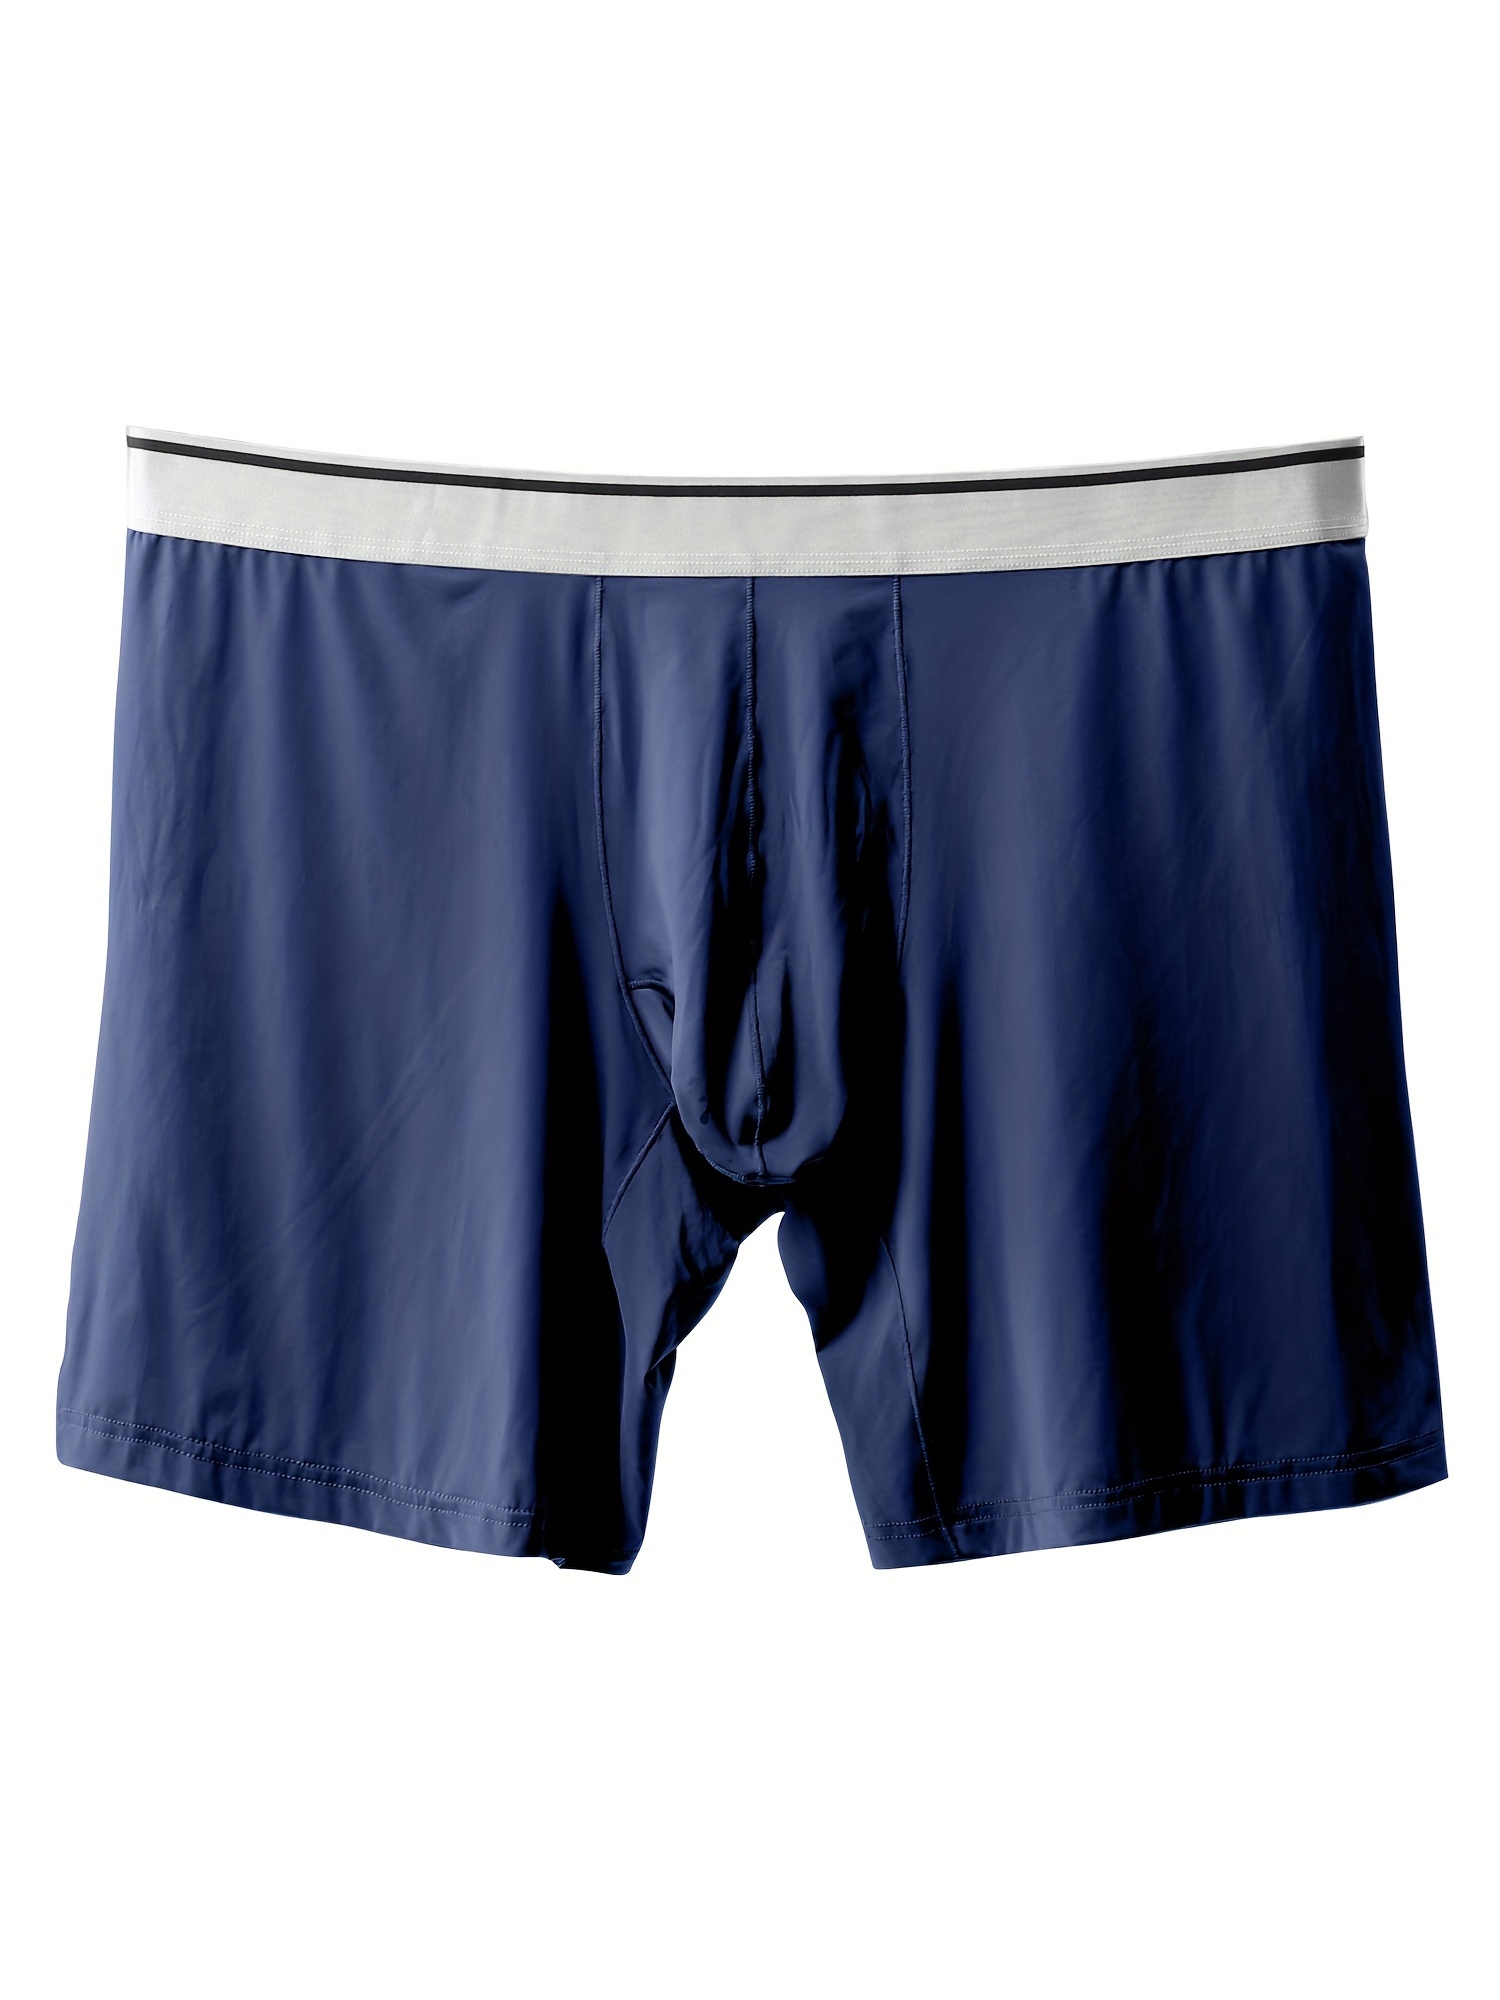 Mens Elephant Underwear -  Australia